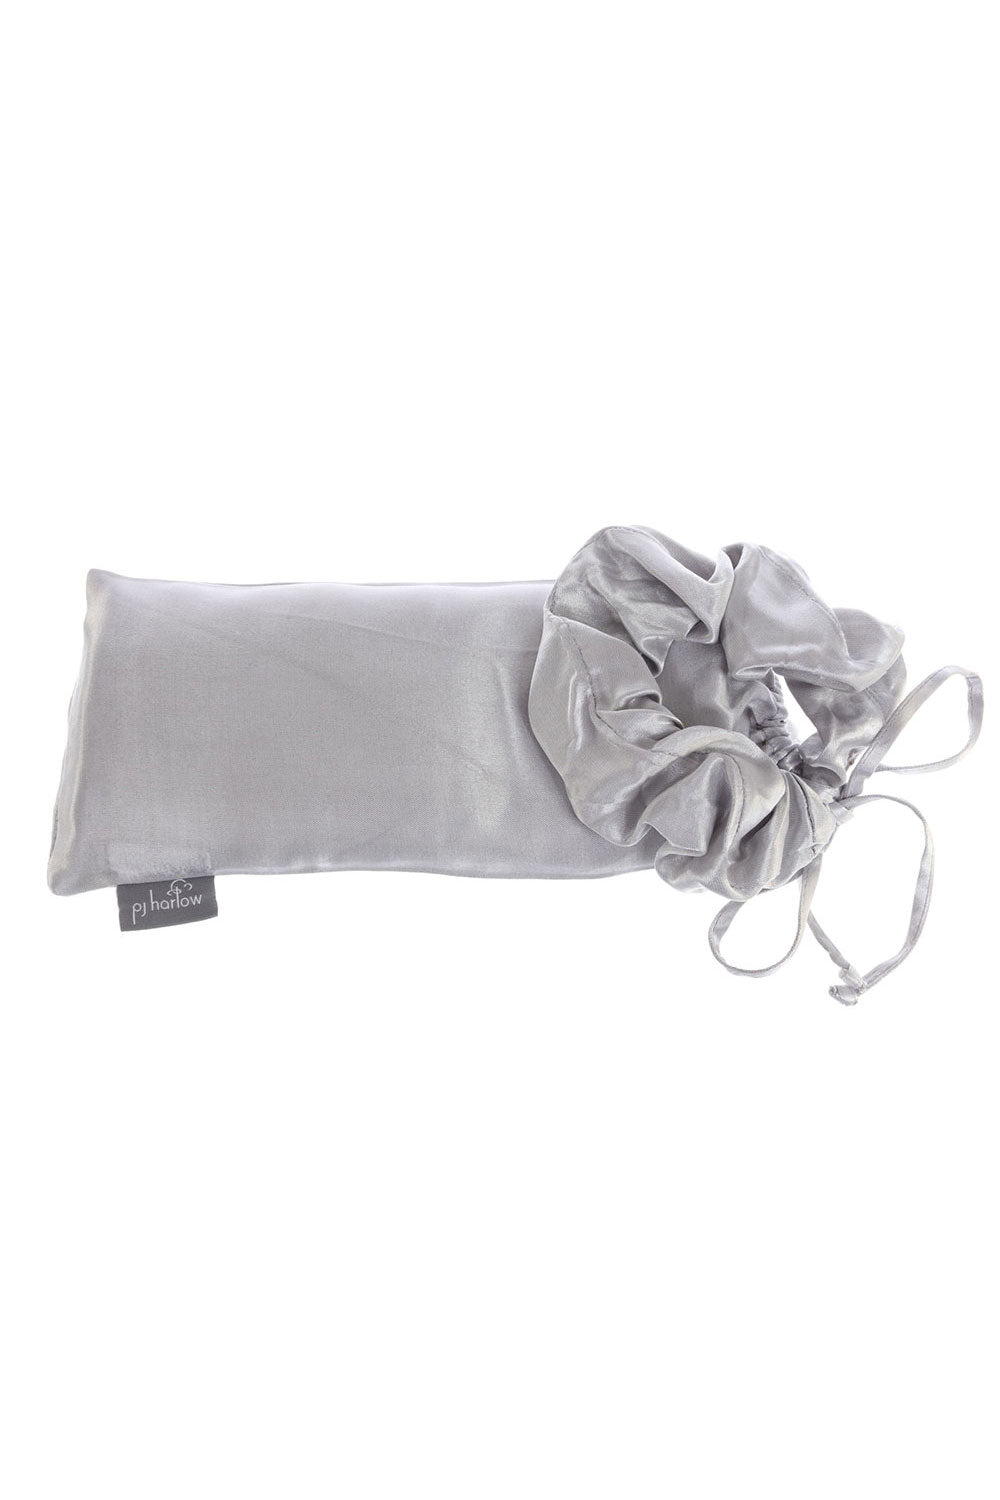 Standard Satin Pillowcase with Scrunchie